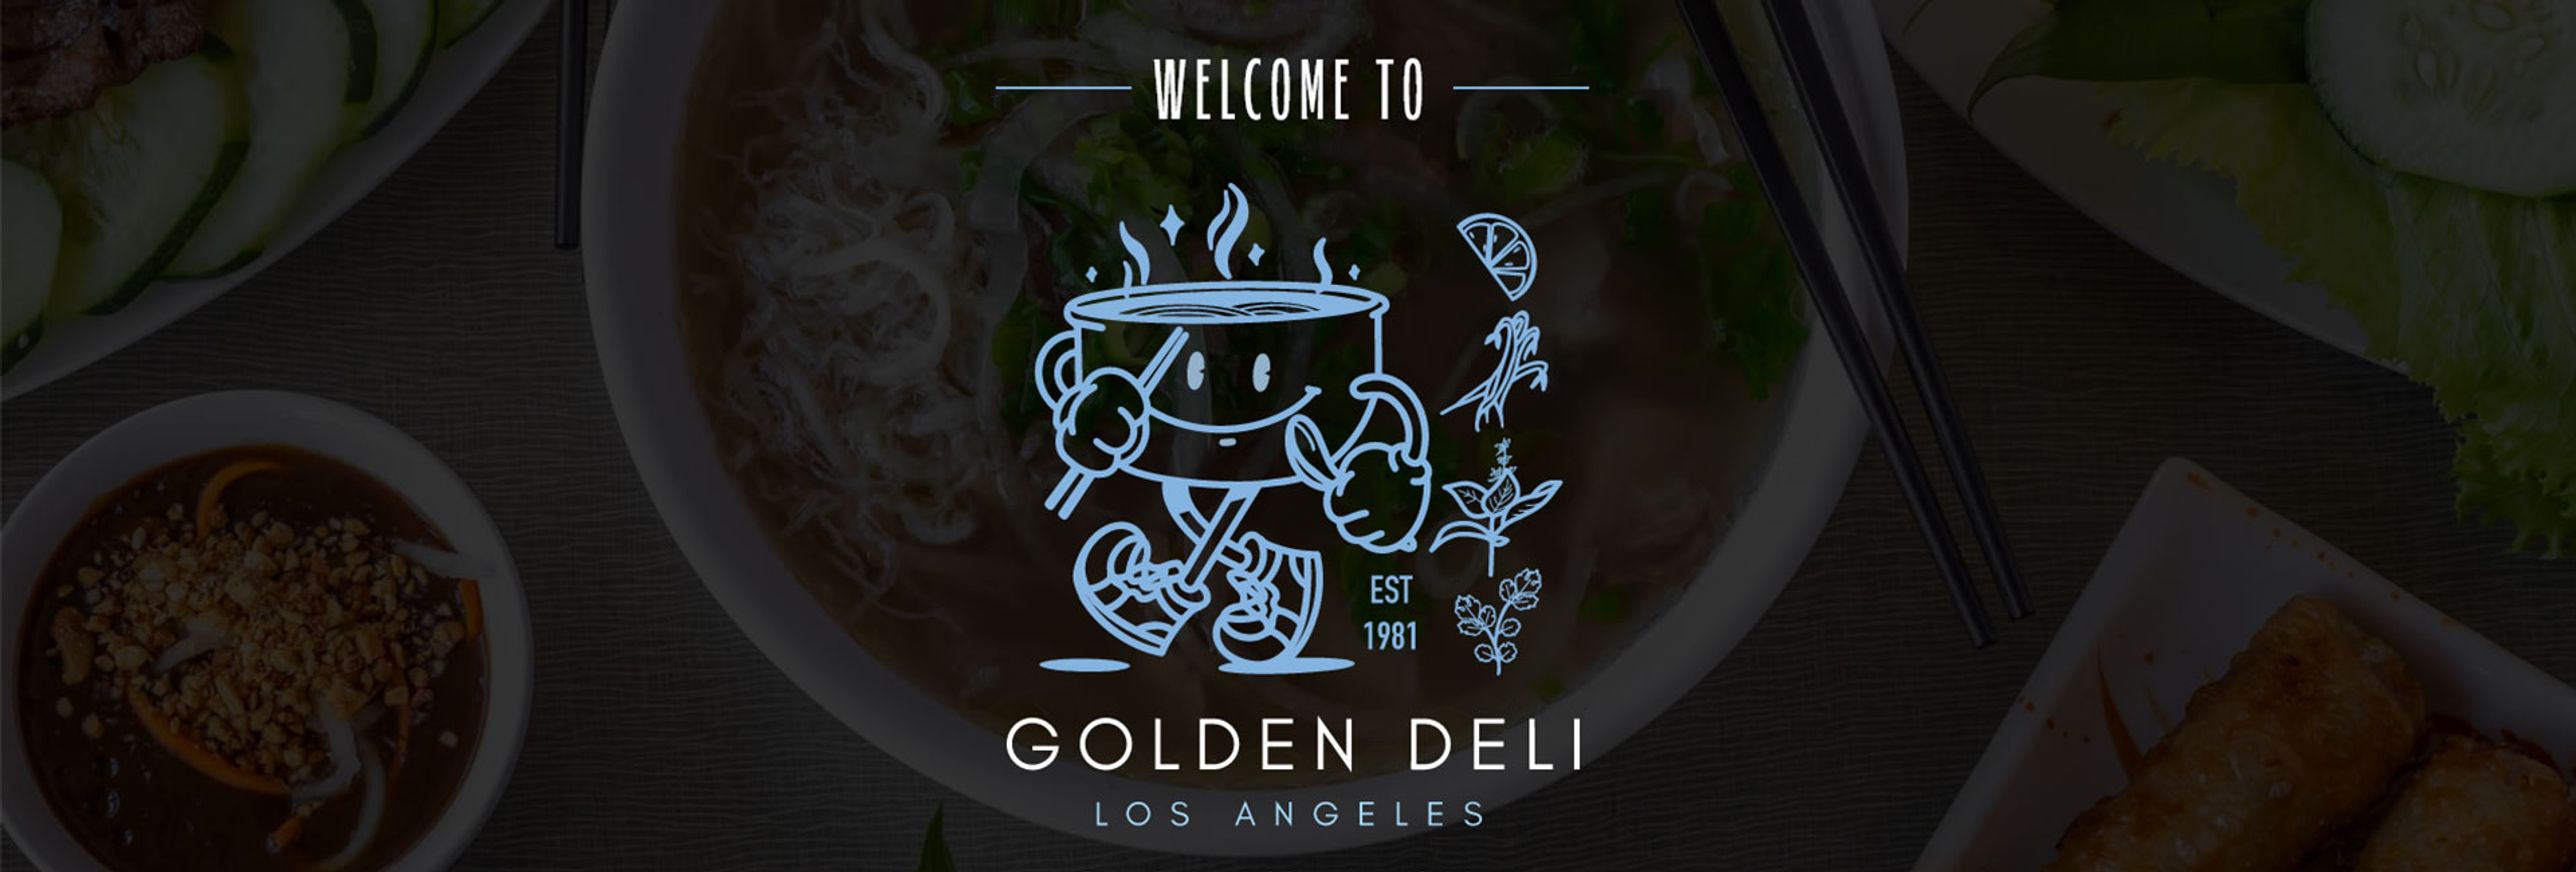 The Golden Deli Restaurant Website Design